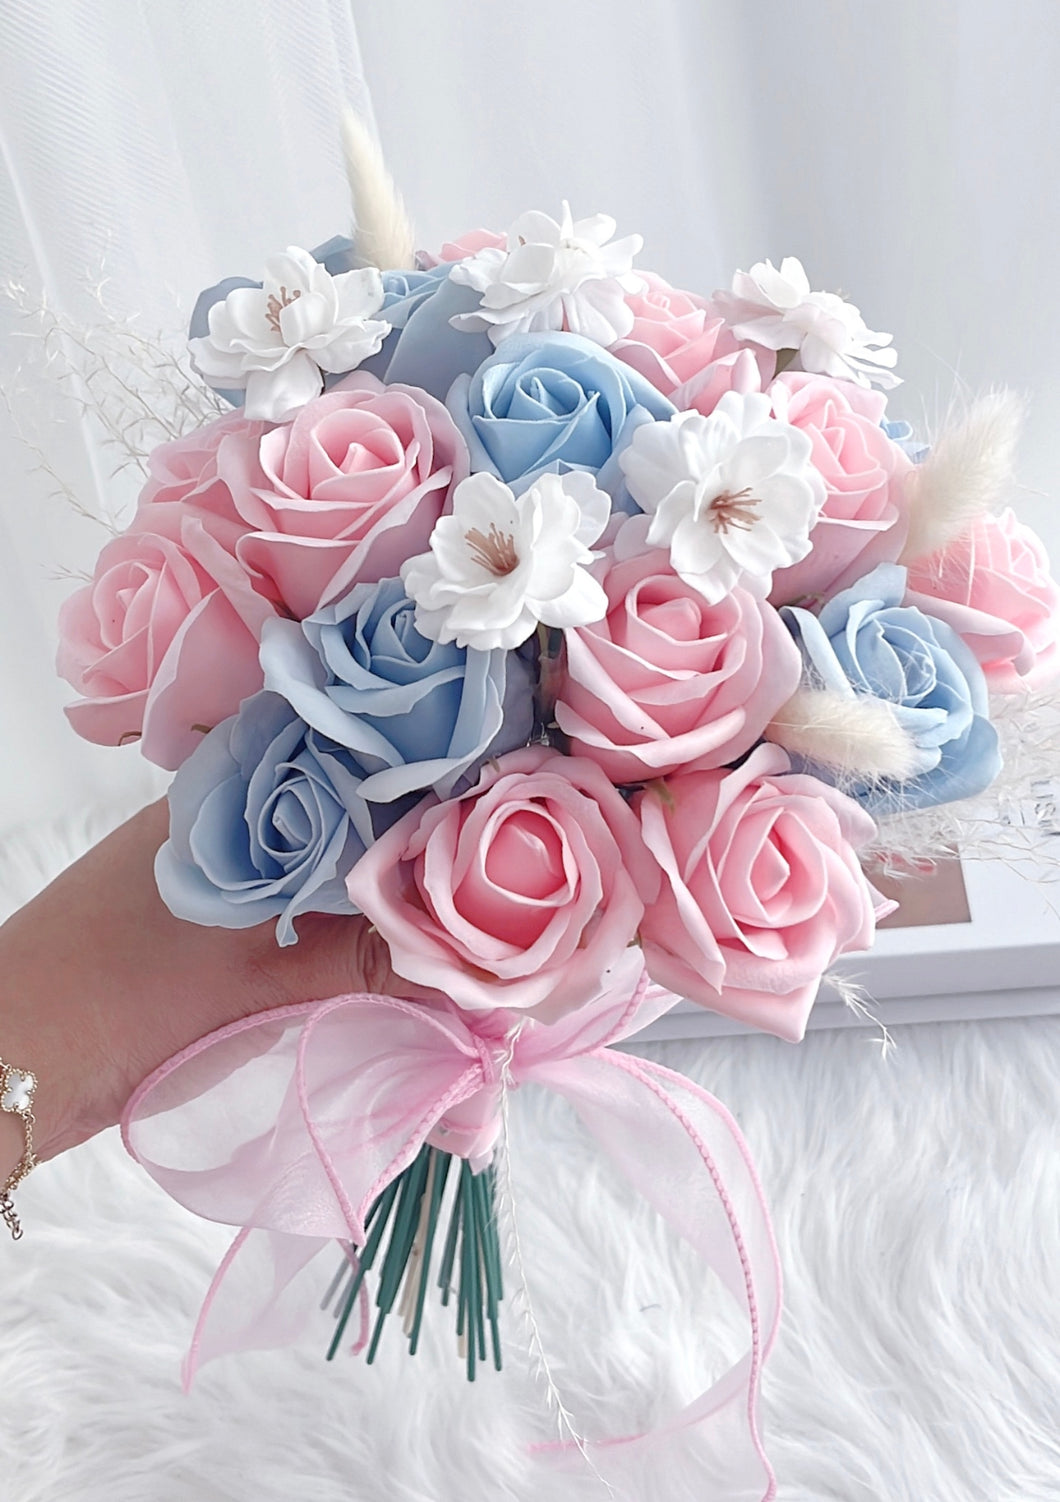 Pink and Blue Soap Rose Bridal Bouquet 雾面蓝粉香皂花玫瑰新娘手捧